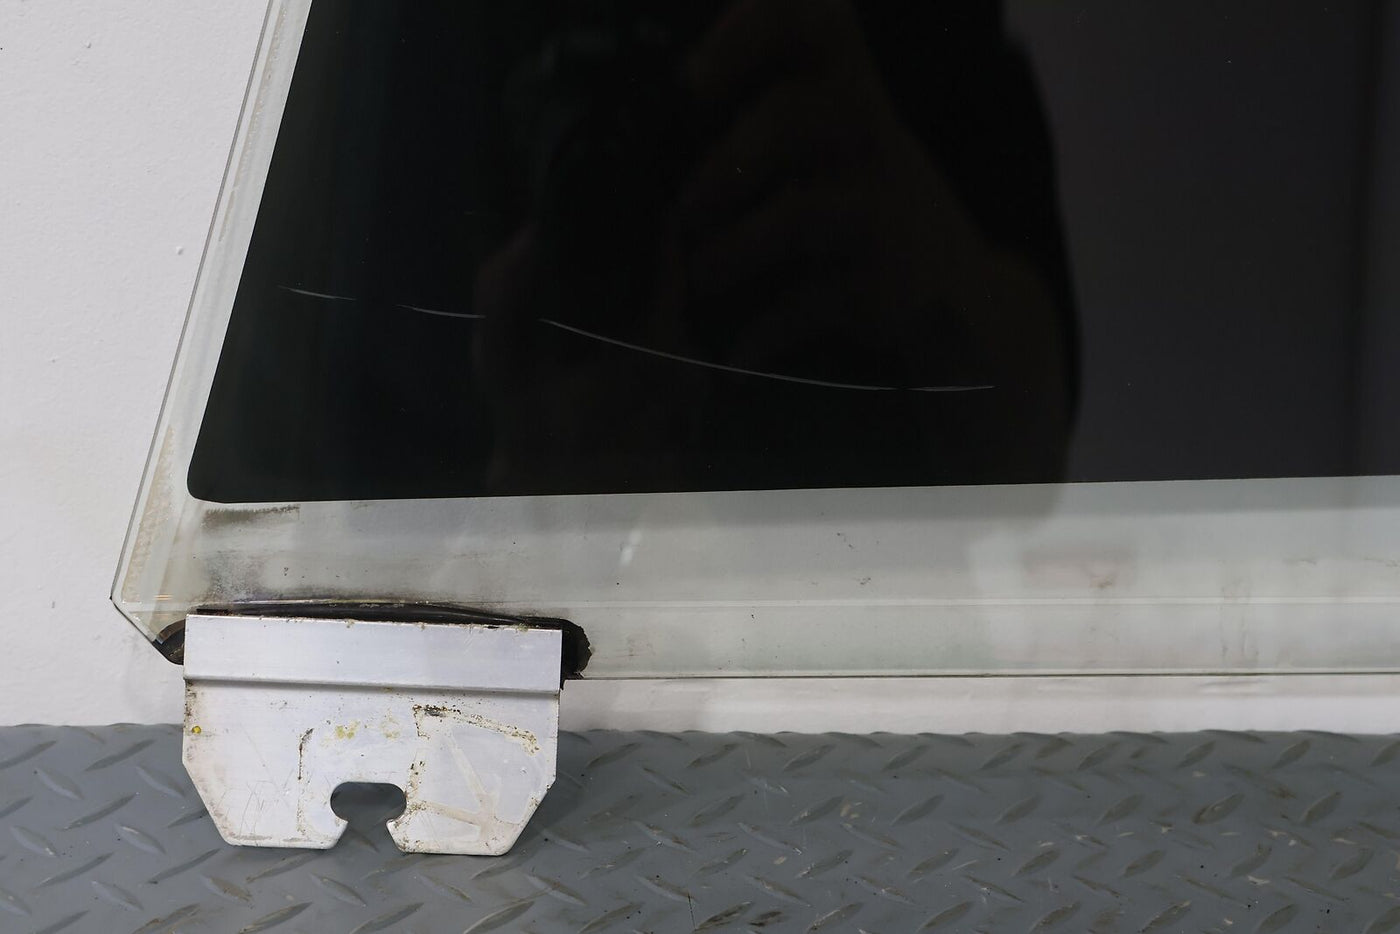 06-12 Bentley Flying Spur Front Right Door Window Glass (Self Tint) Delaminated